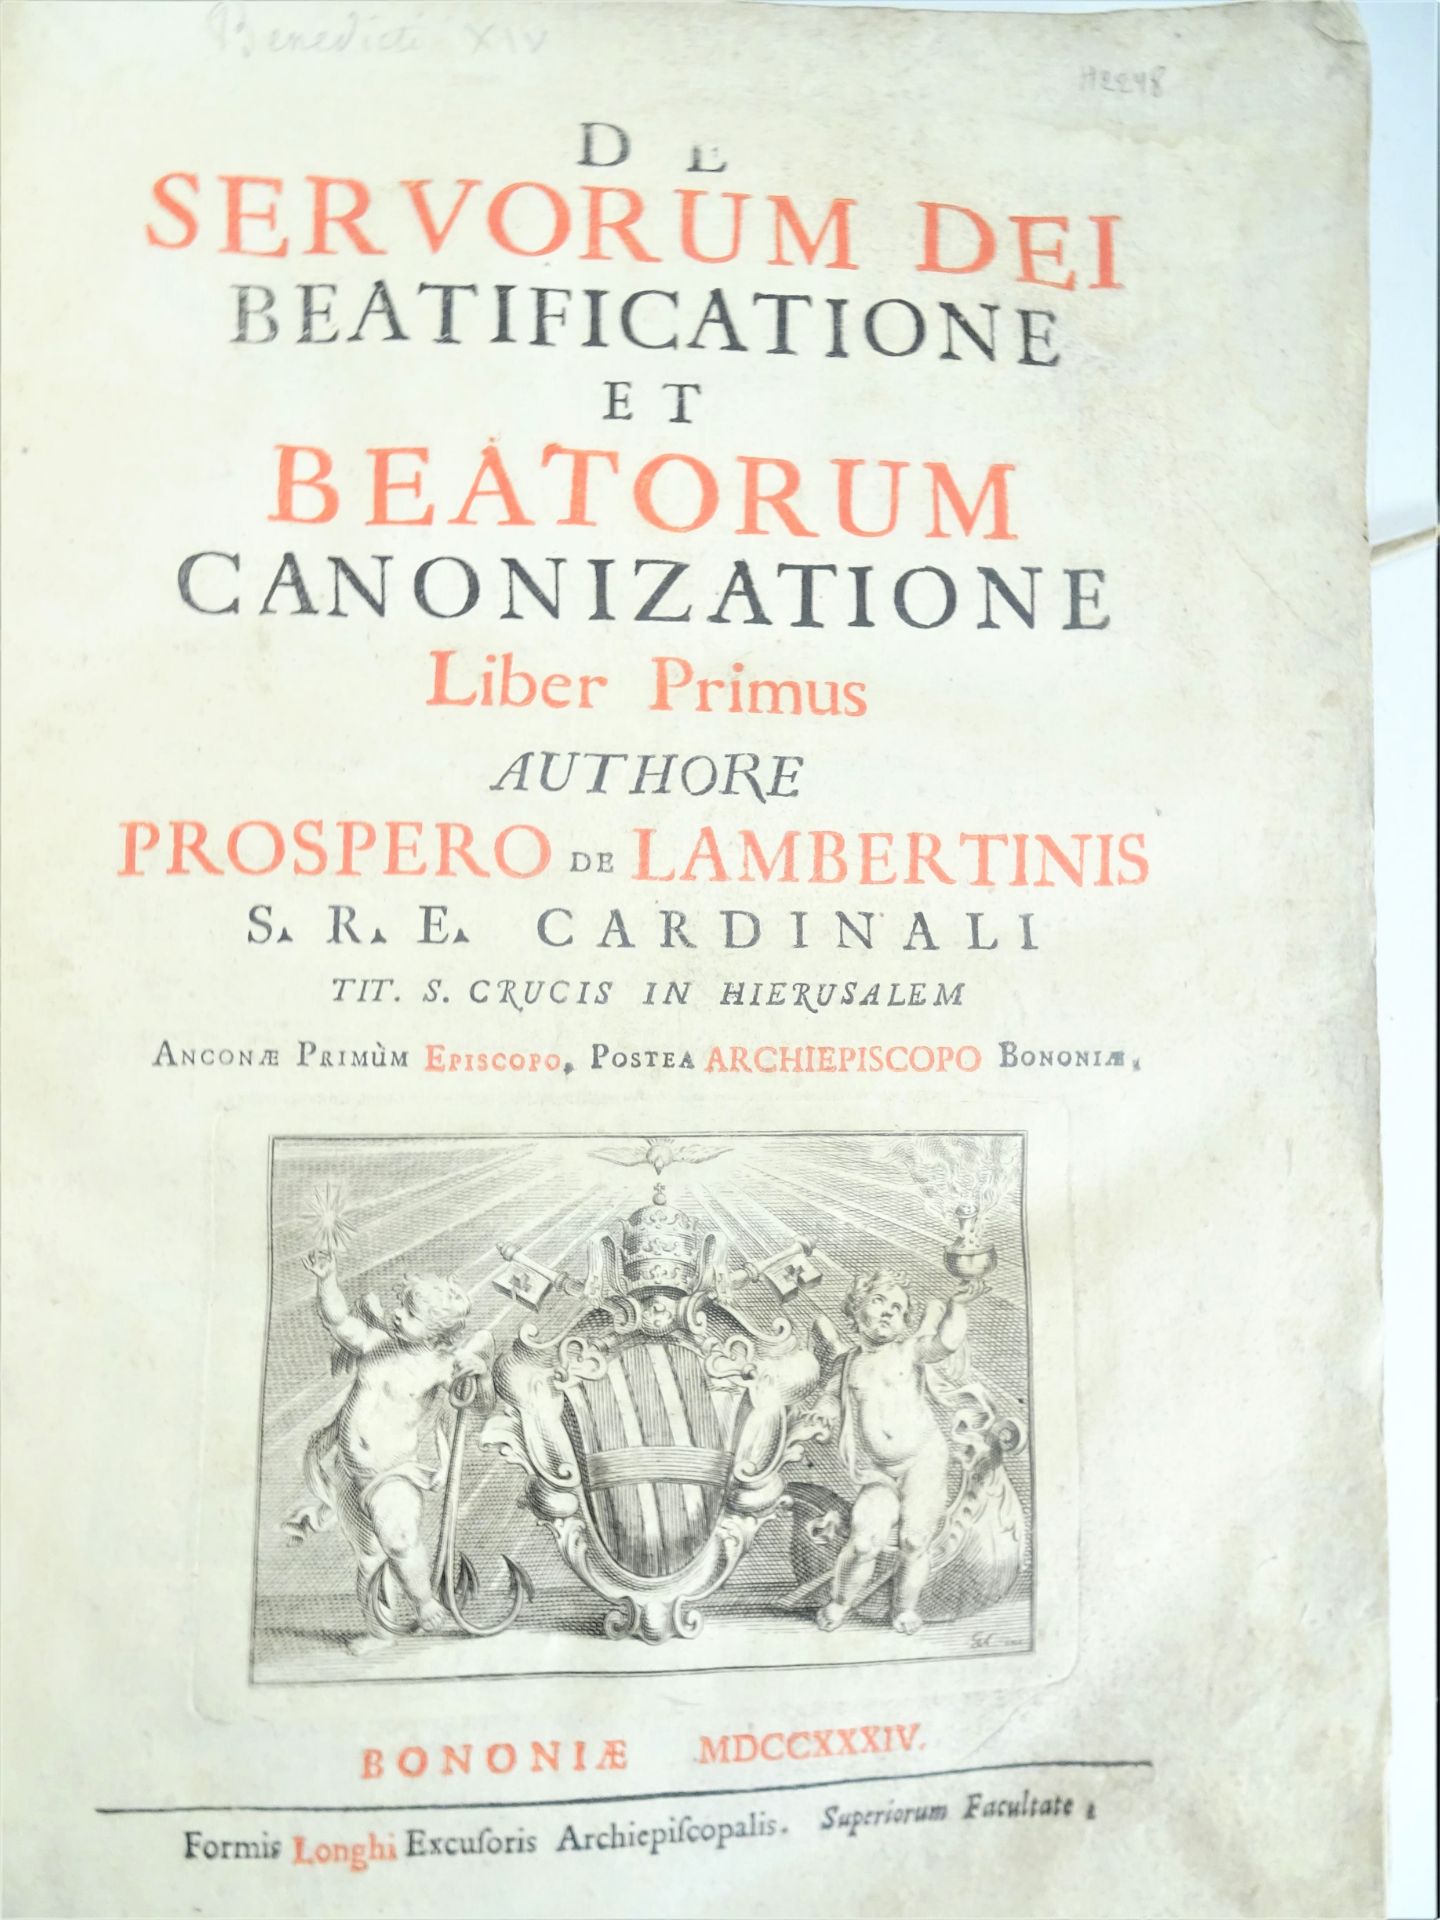 |Réligion| Prospero de Lambertinis, "De servorum dei beatificatione et beatorum canonizatione - Image 2 of 8